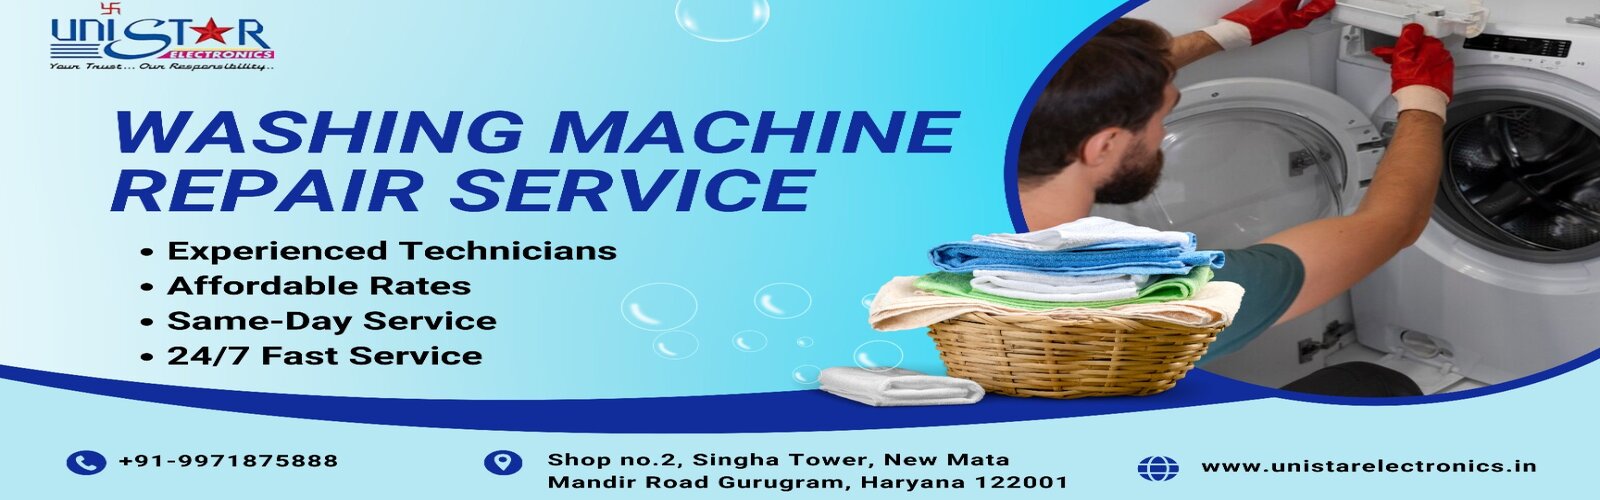 Washing machine technician at washing machine repair service centre in Gurgaon